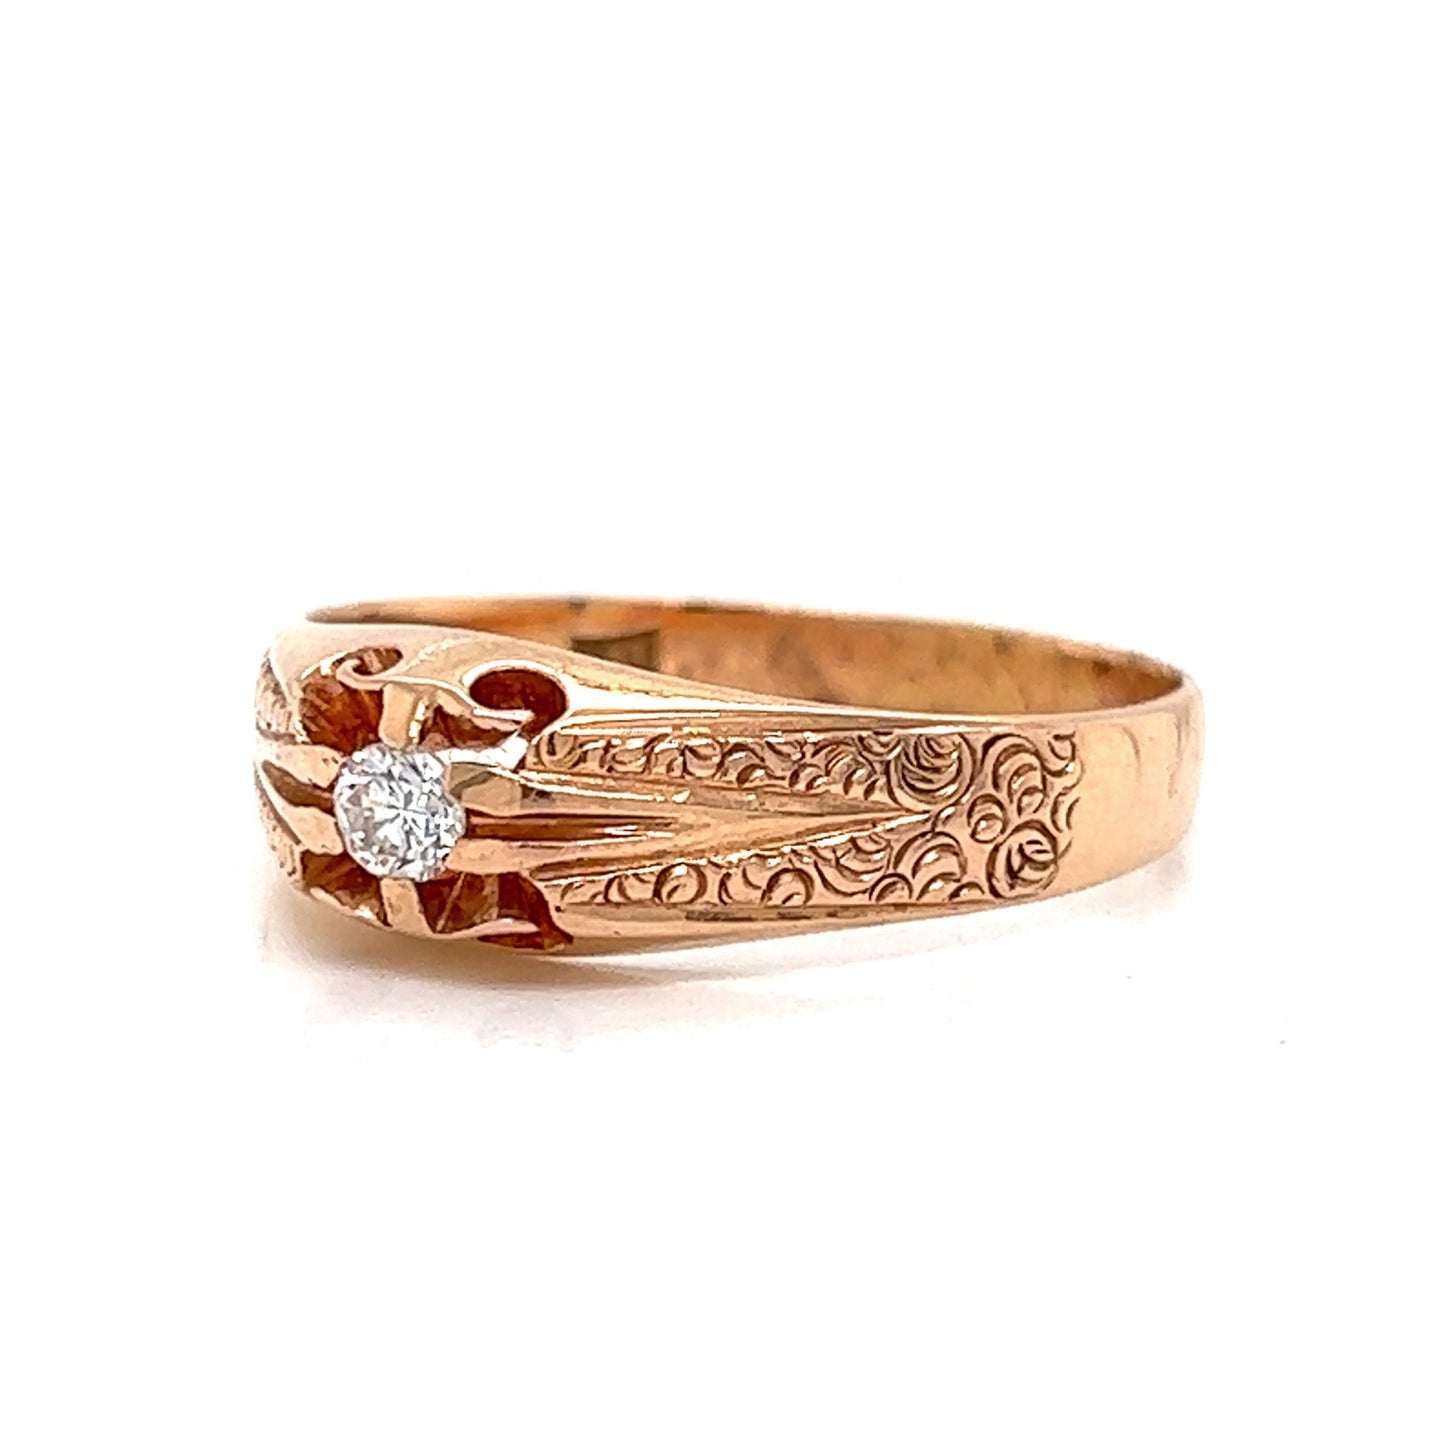 Victorian Engraved Single Diamond Ring in 14k Rose Gold